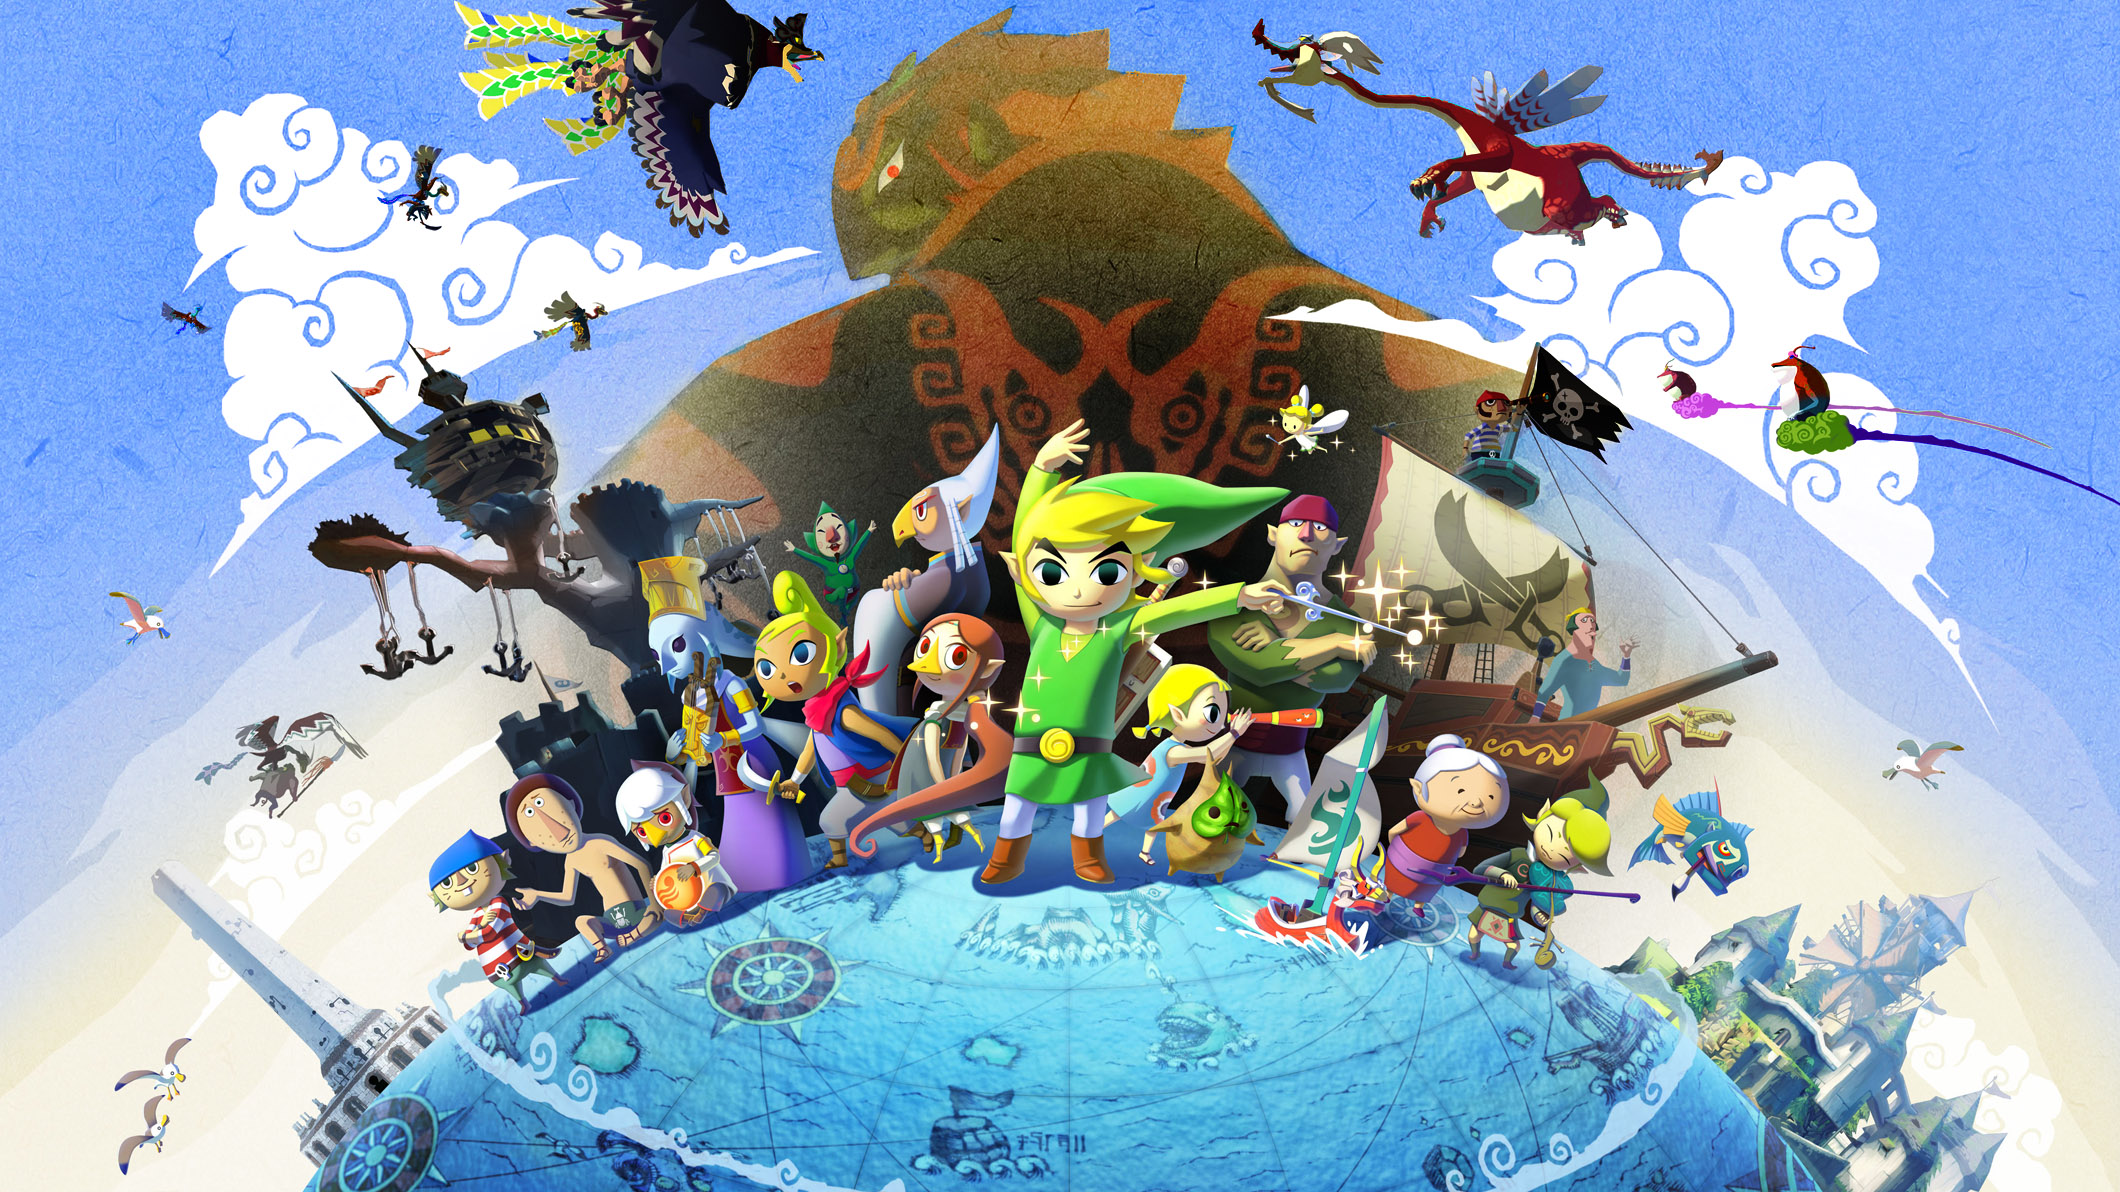 Nintendo Wii U The Legend of Zelda: The Wind Waker Video Games for sale